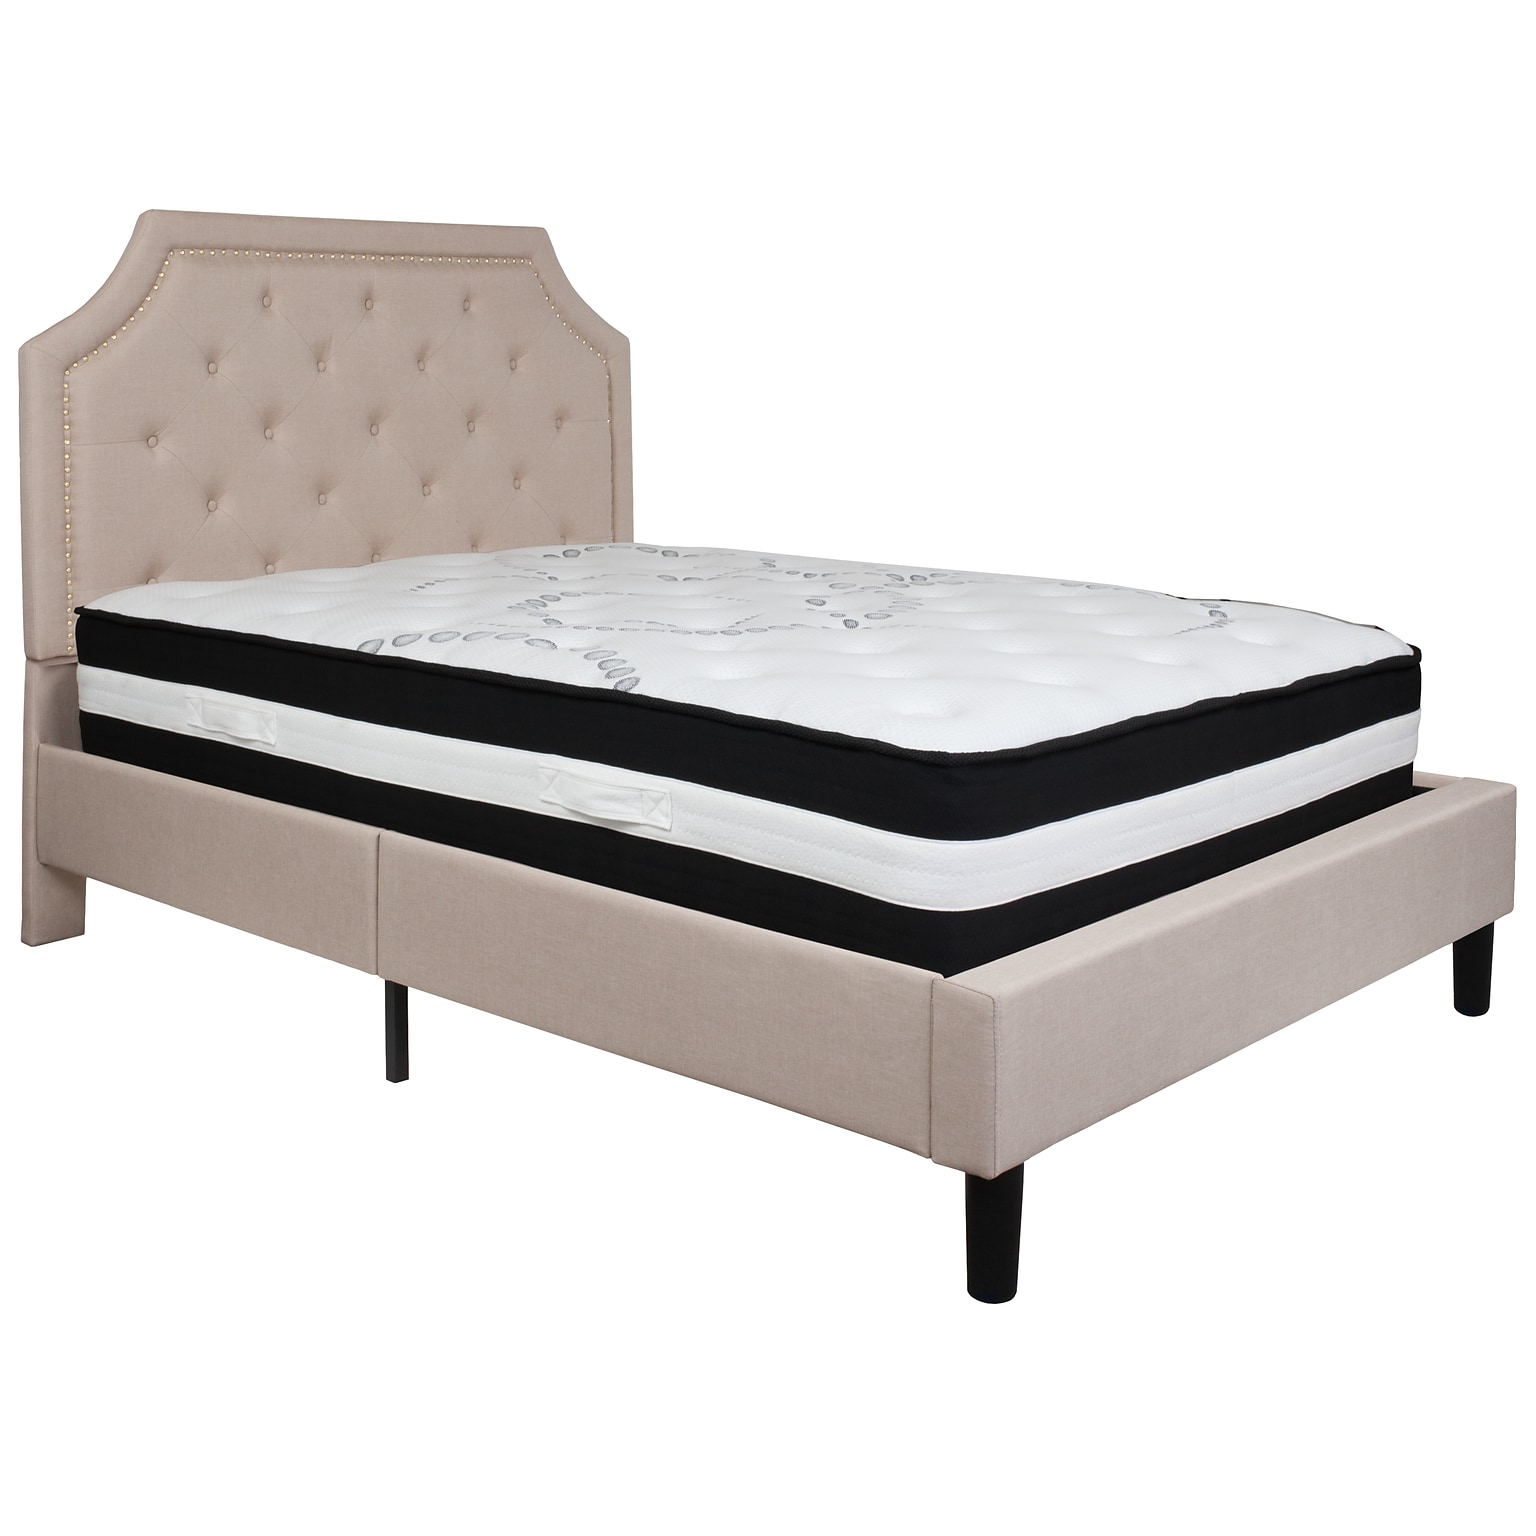 Flash Furniture Brighton Tufted Upholstered Platform Bed in Beige Fabric with Pocket Spring Mattress, Full (SLBM2)